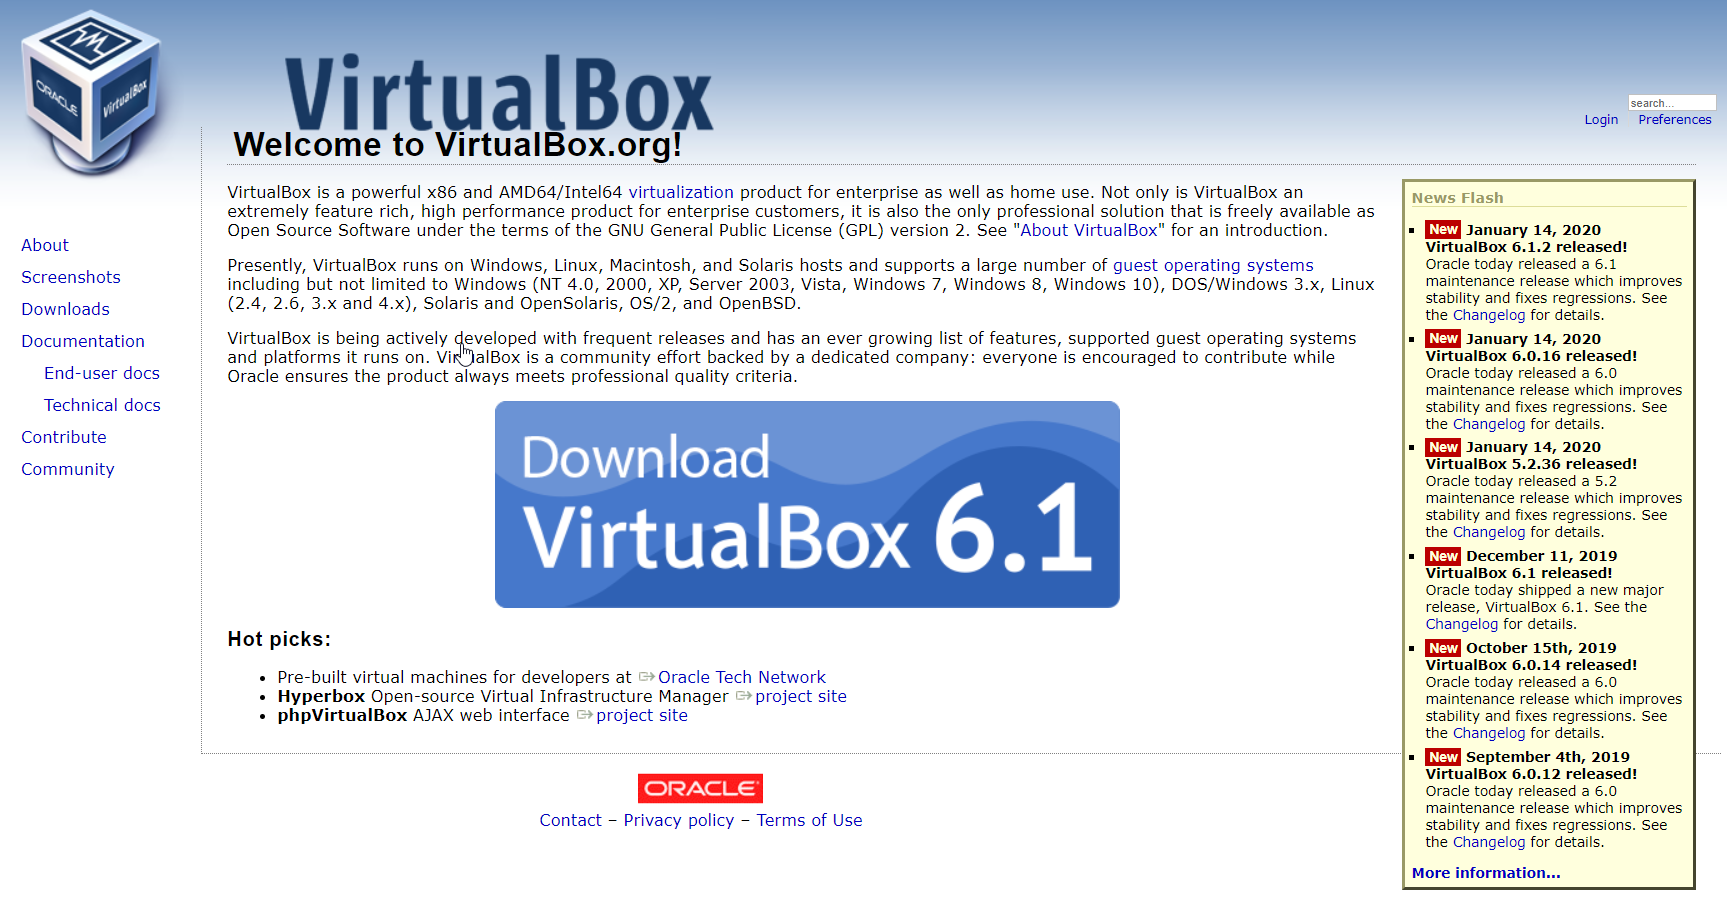 Como instalar o Oracle VM VirtualBox no Windows 10